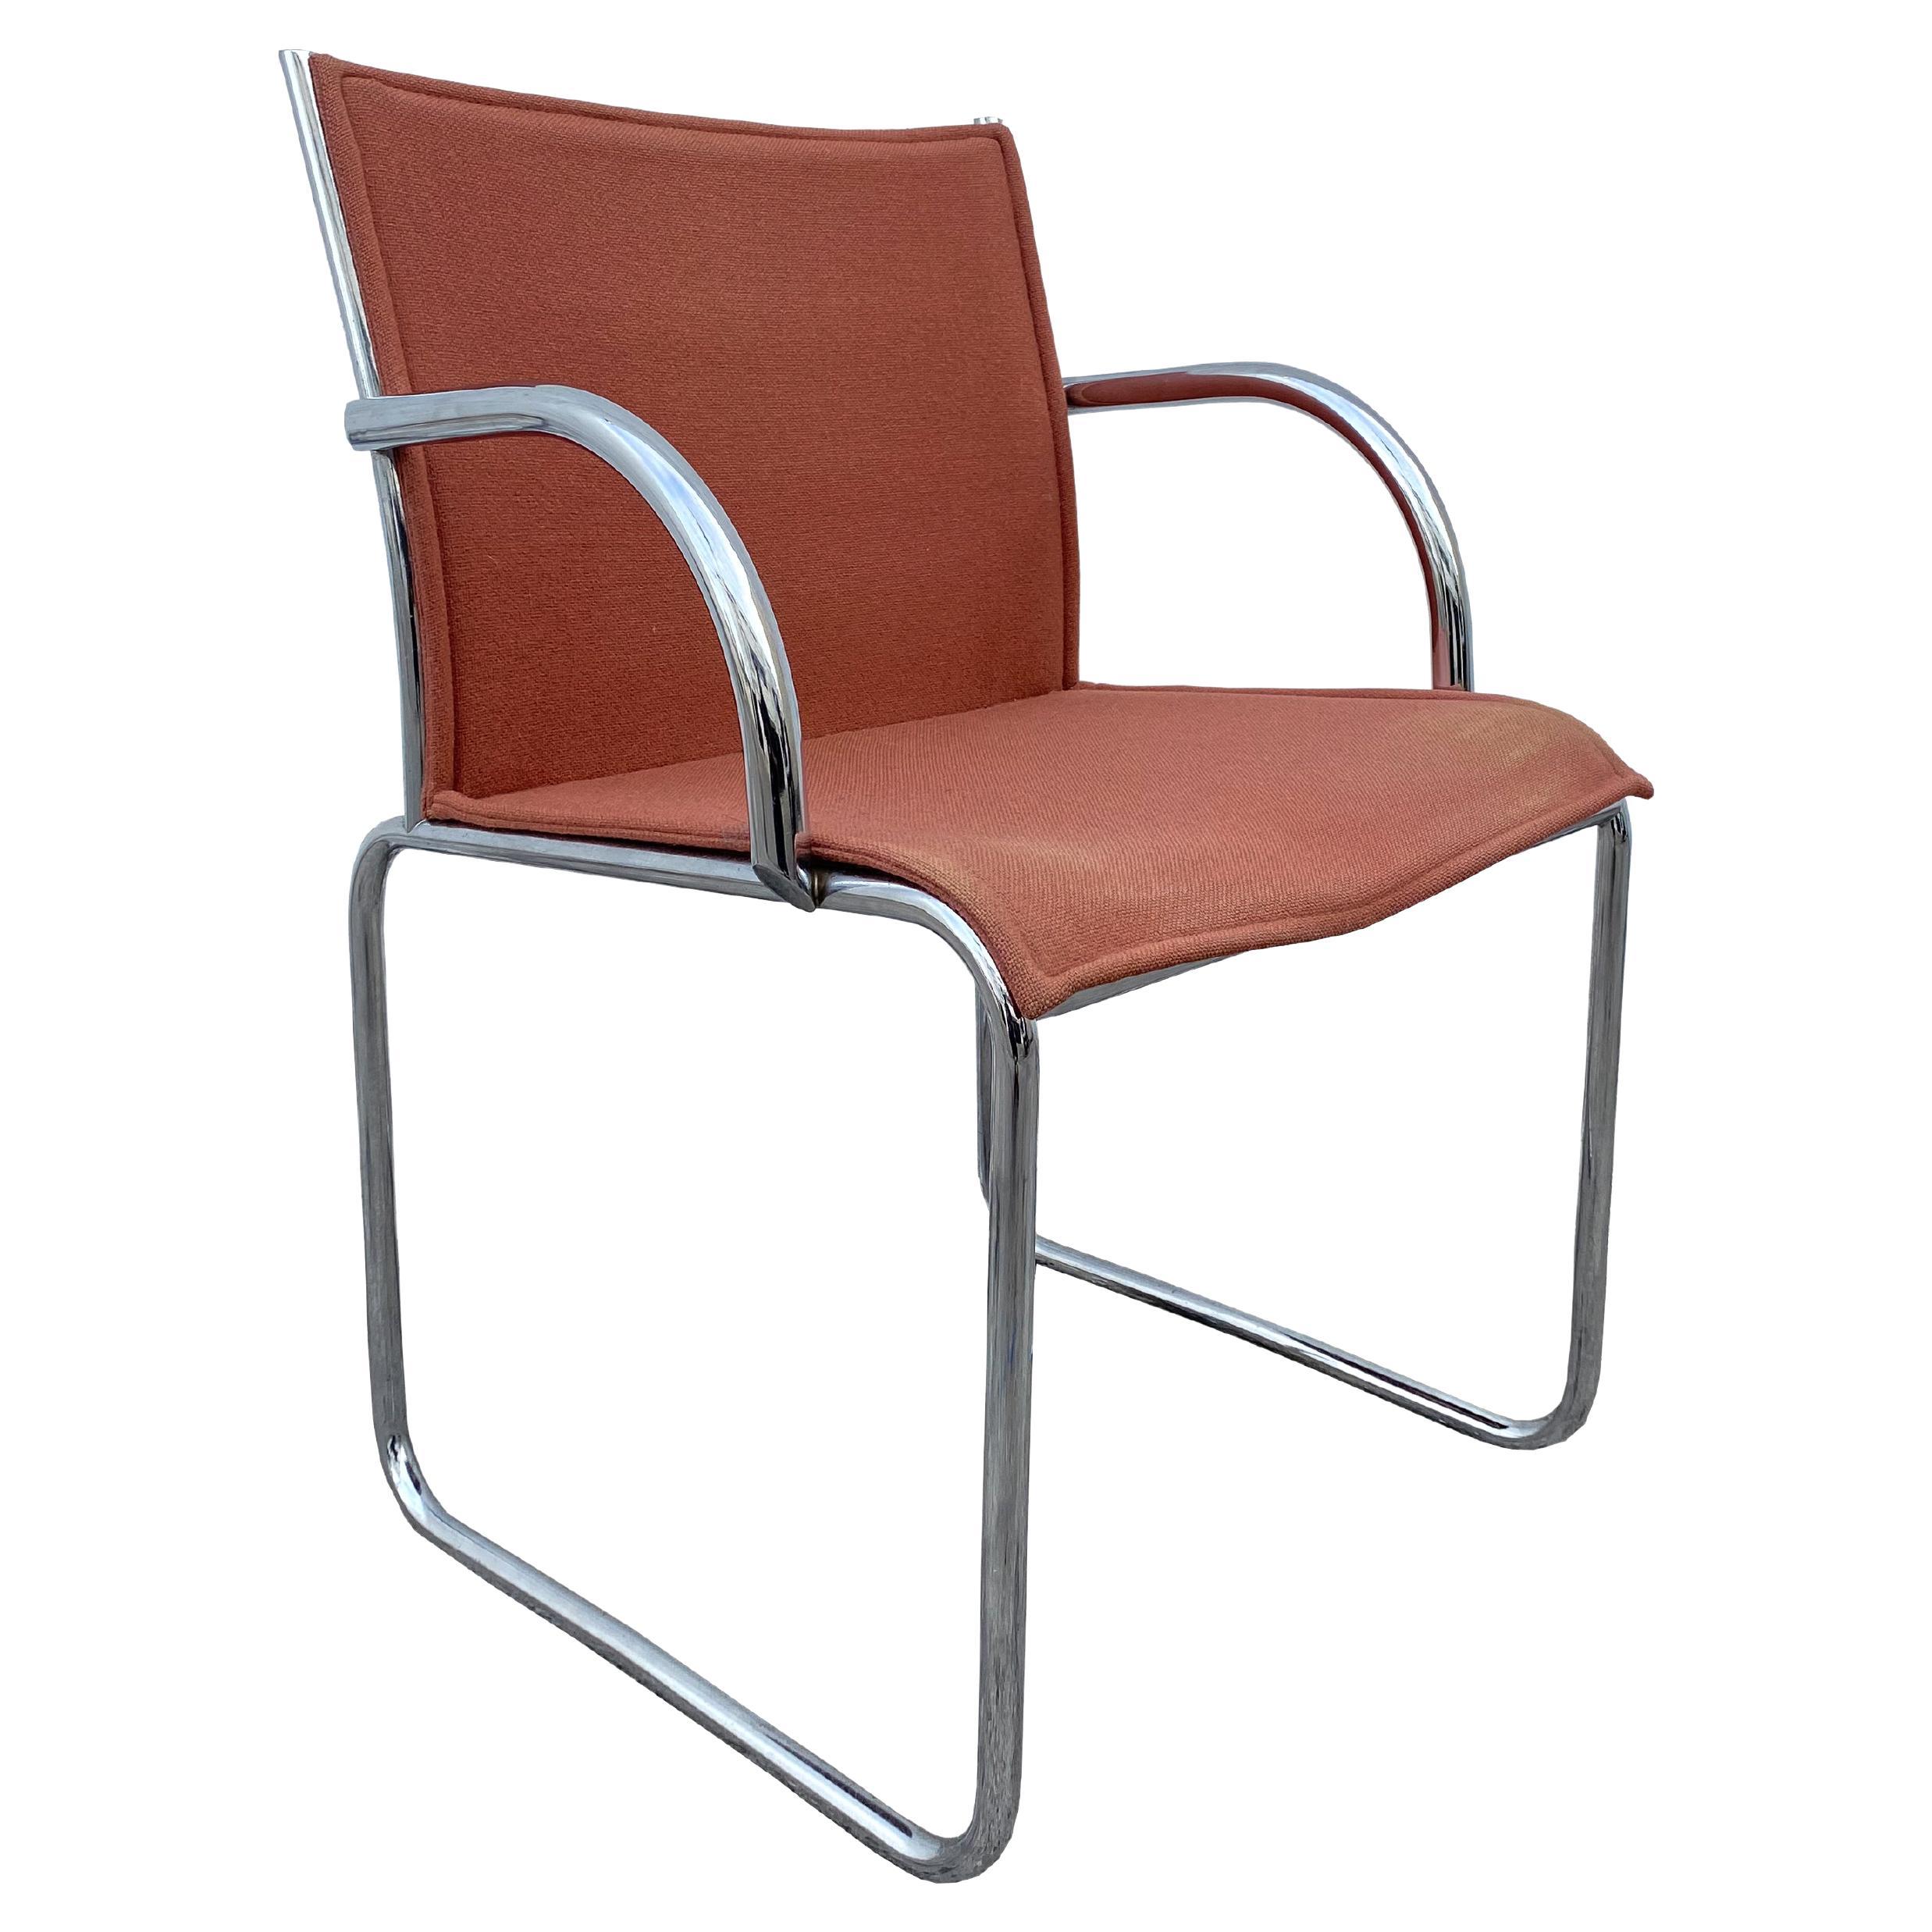 Knoll 1407 Chair by Richard Schultz